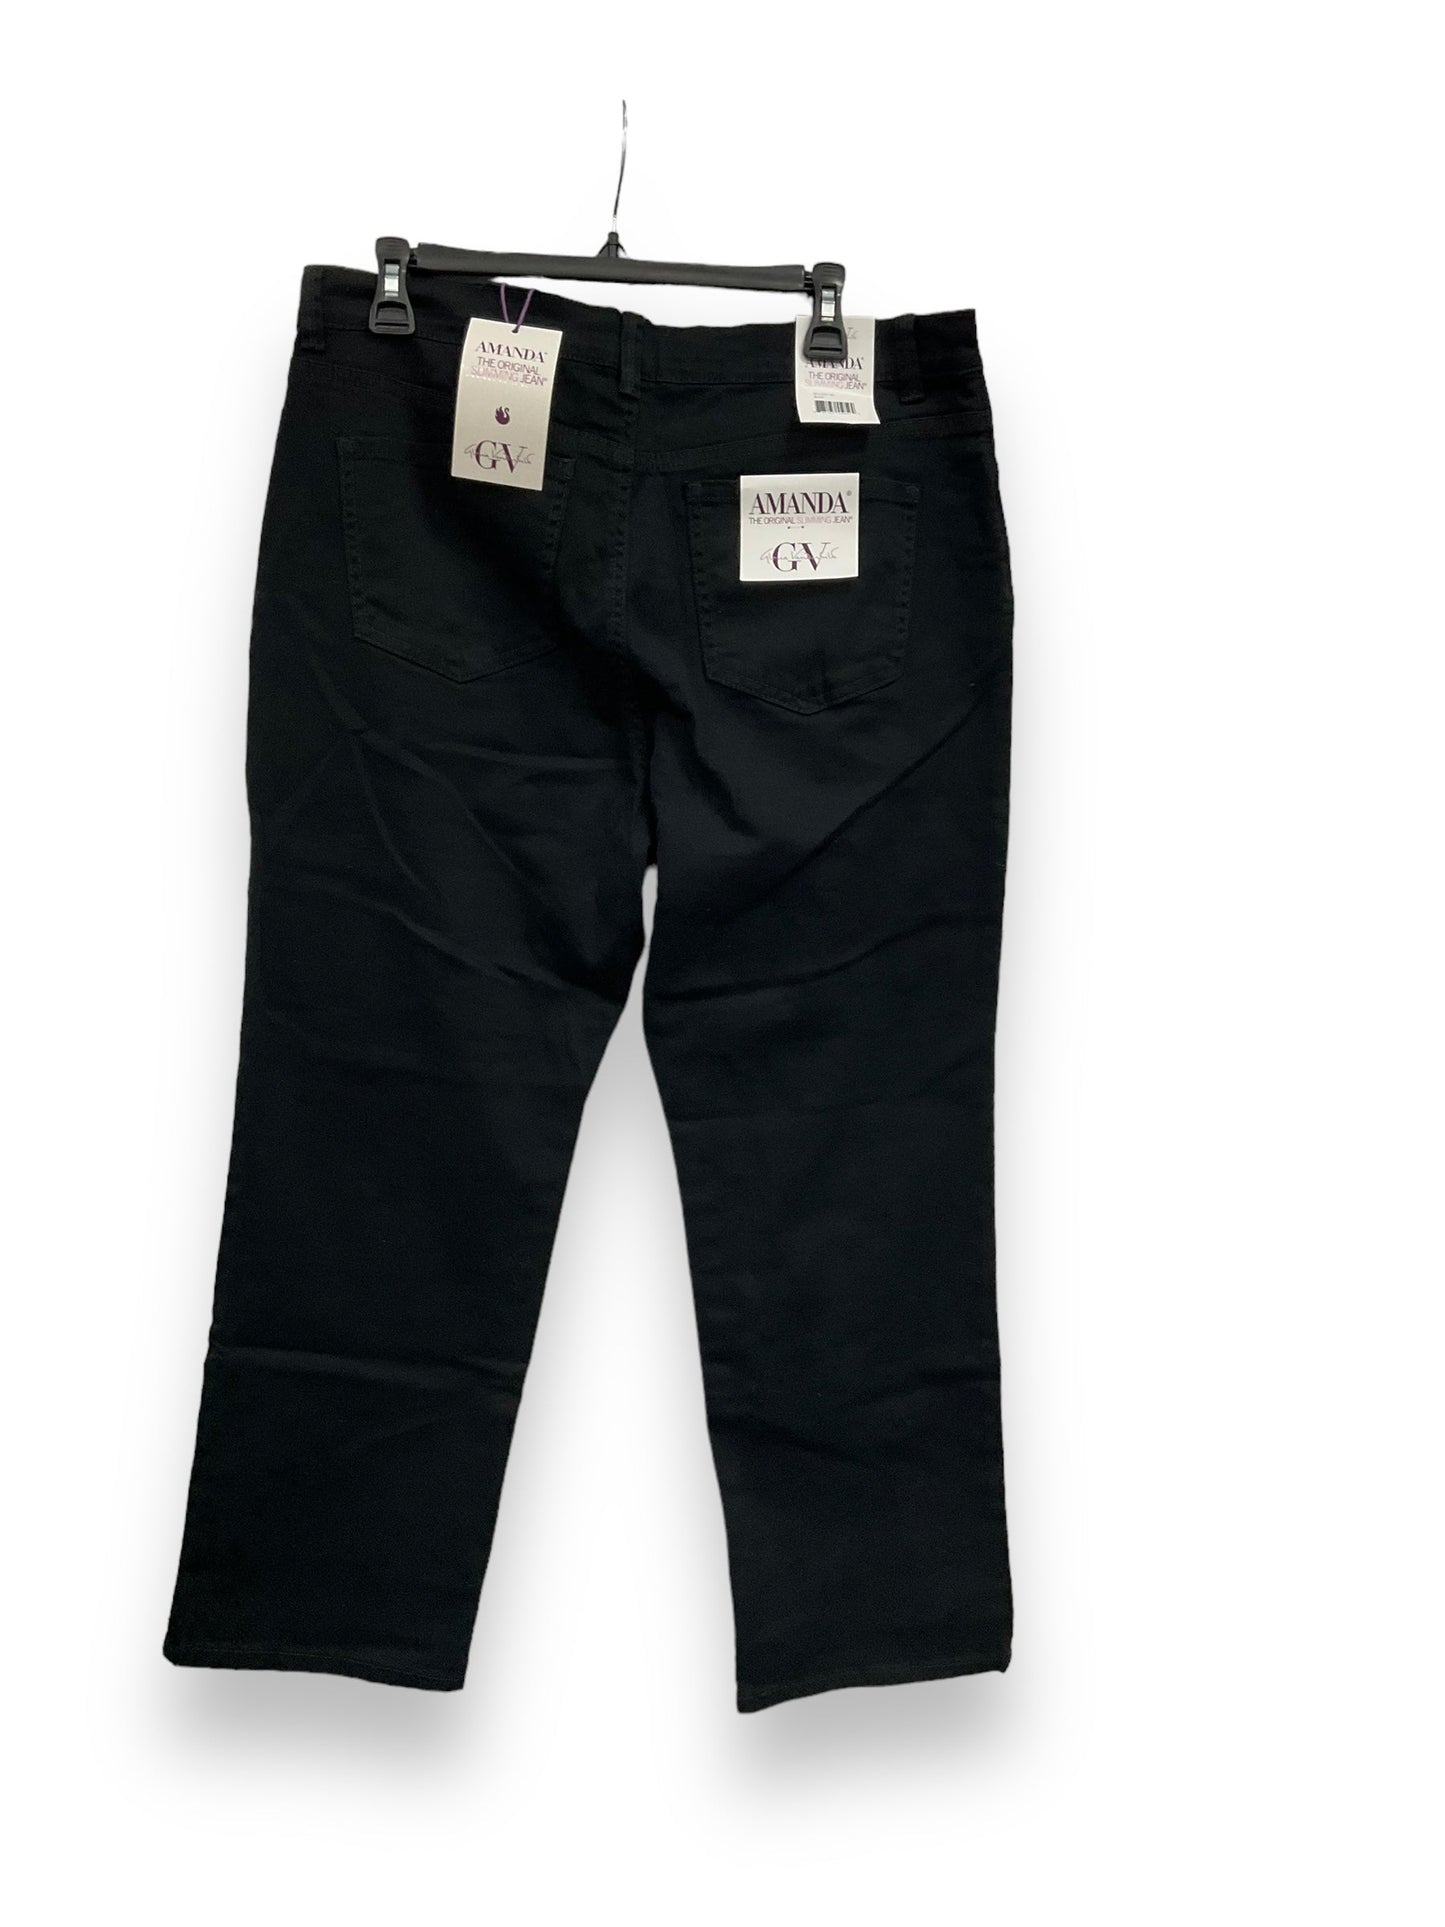 Jeans Cropped By Gloria Vanderbilt  Size: 16